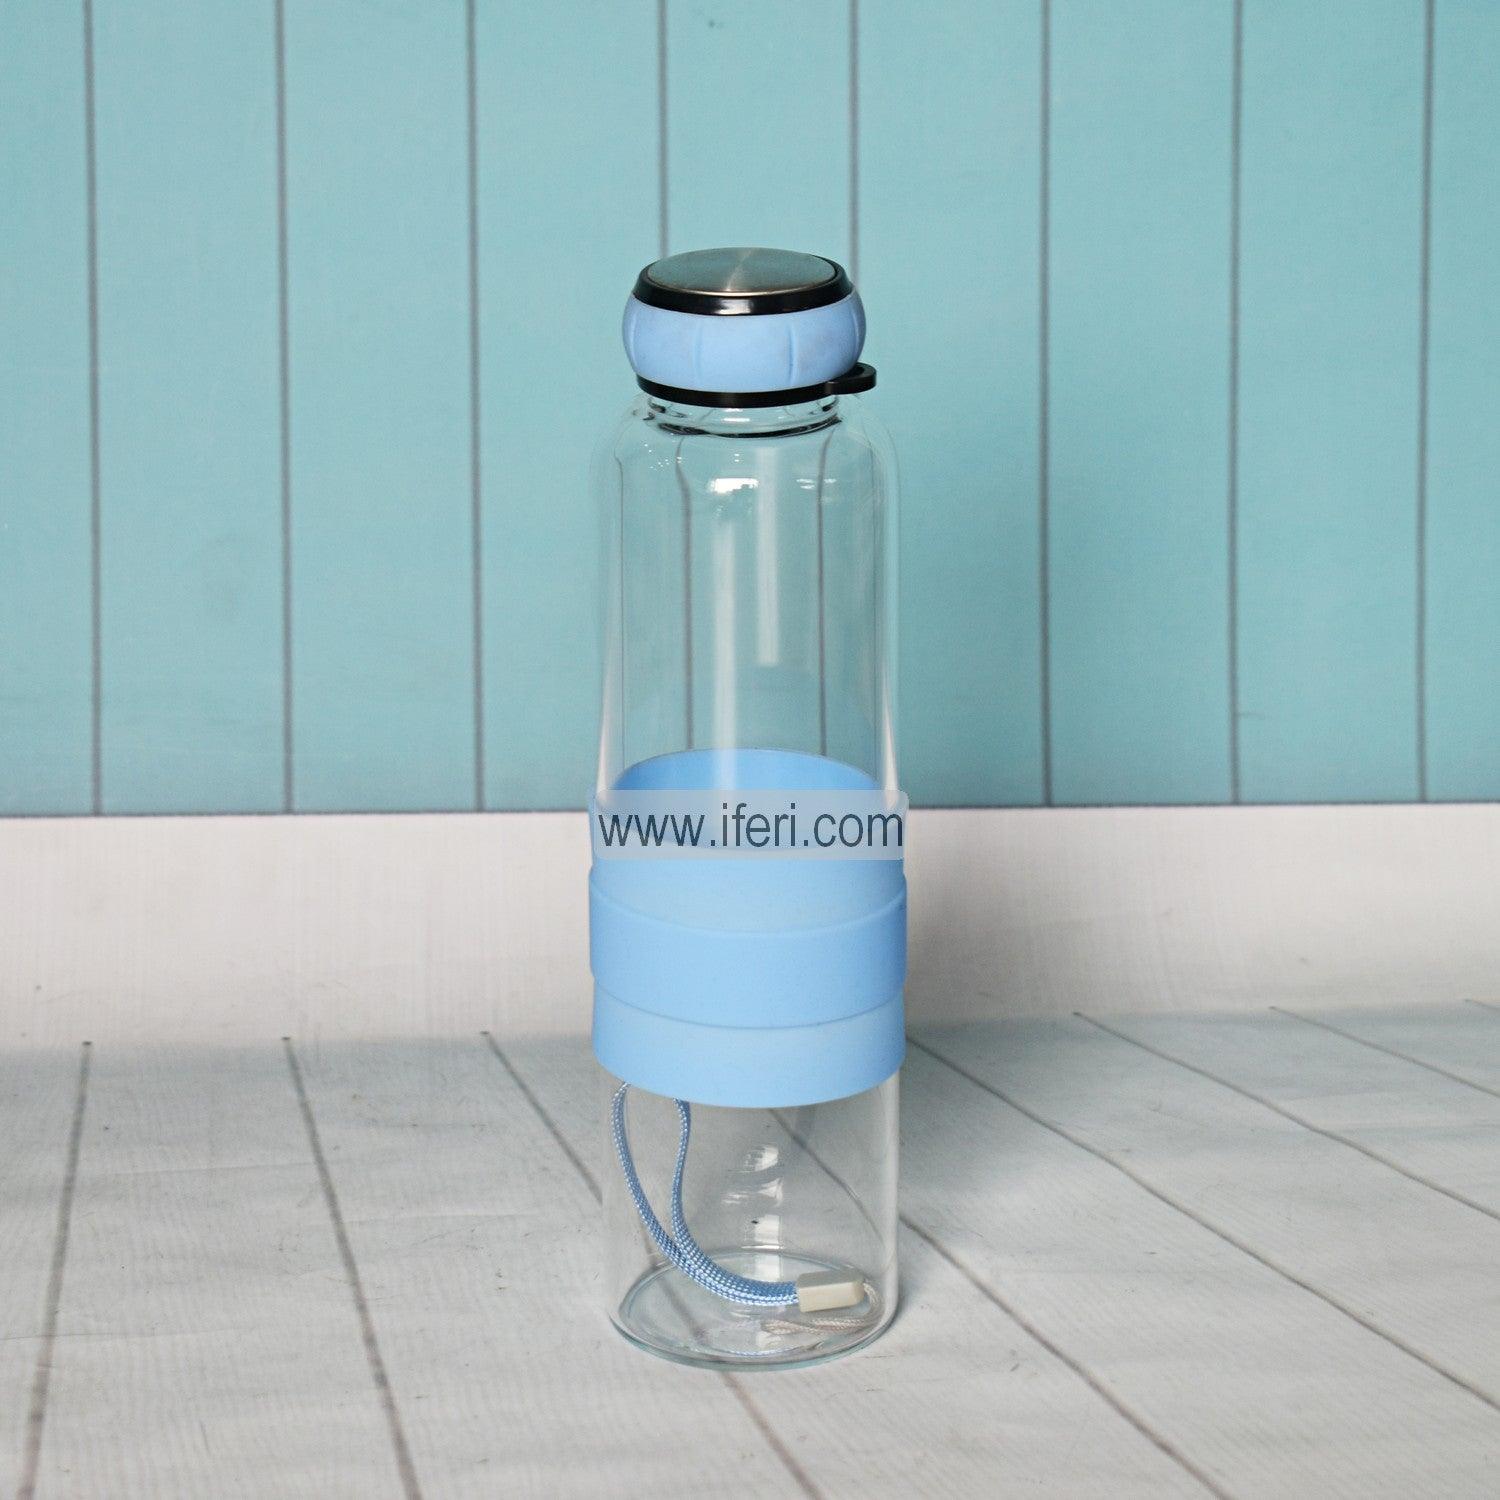 400 ML Glass Water Bottle ALP7517 Price in Bangladesh - iferi.com